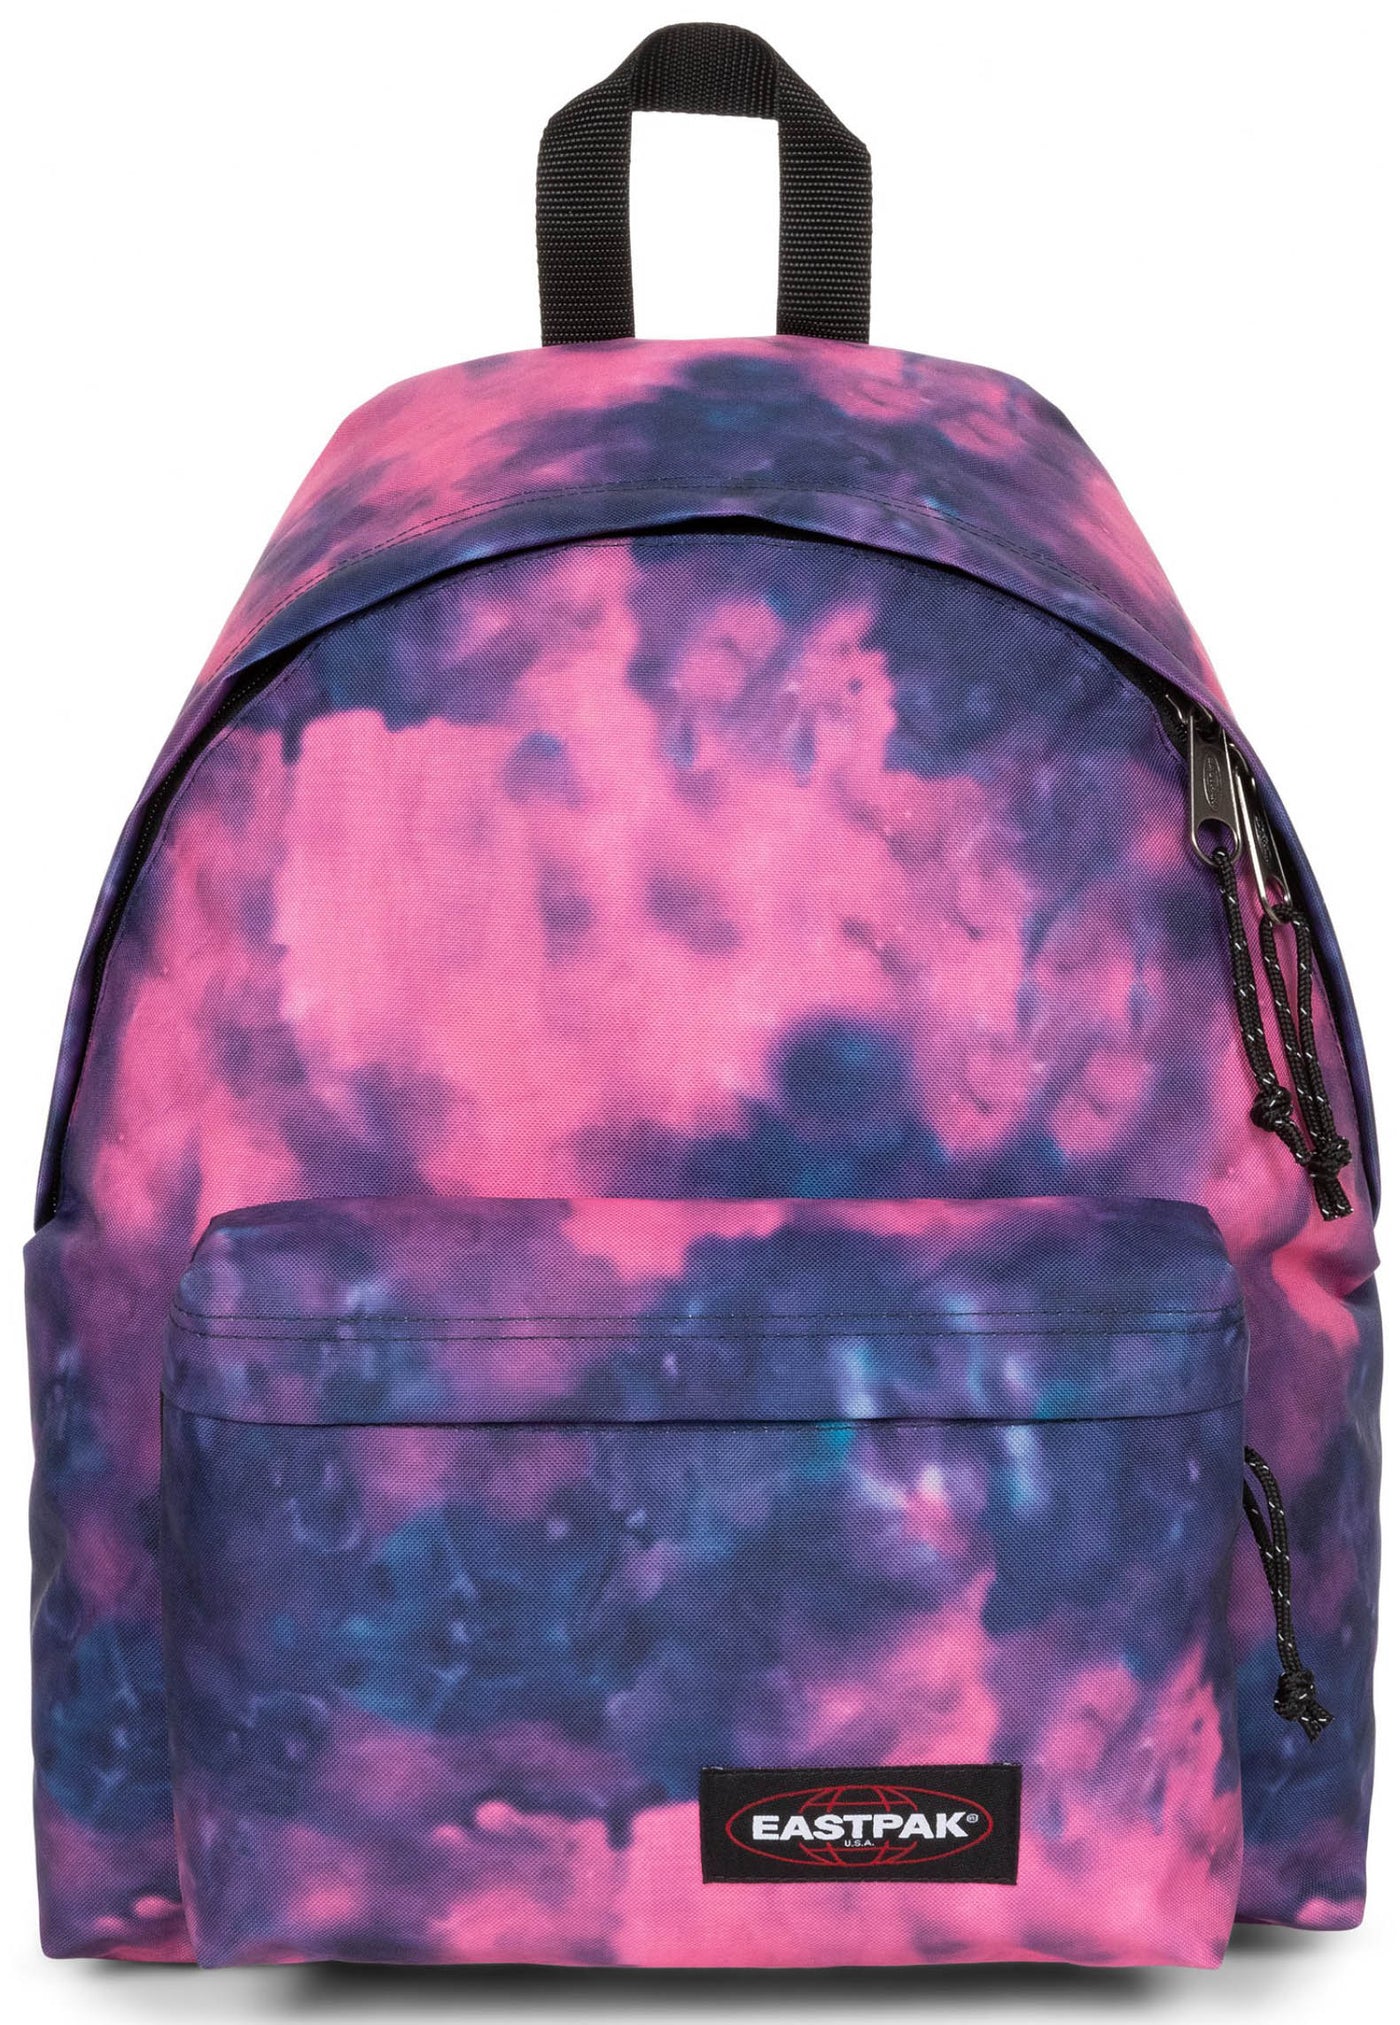 Eastpak Padded Pak'r Backpack - Camo Dye Pink – thebackpacker